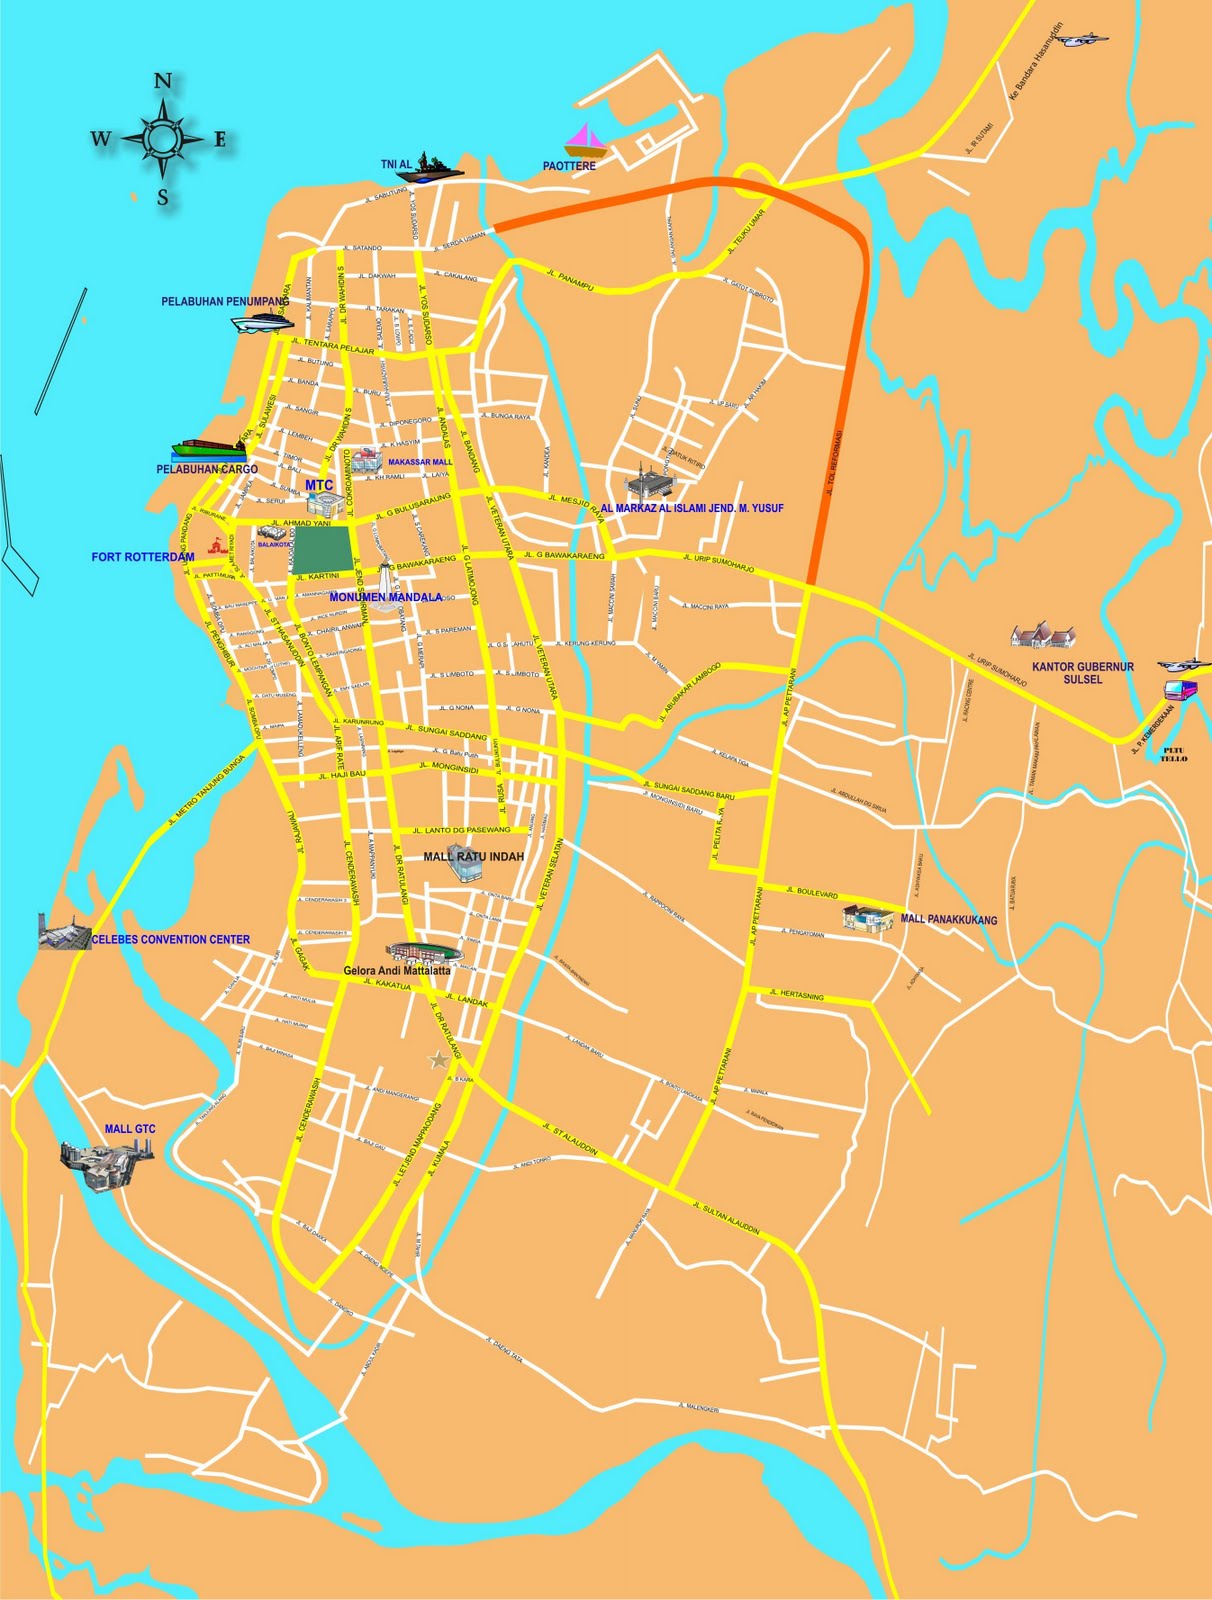 Peta Kota: Peta Kota Makassar